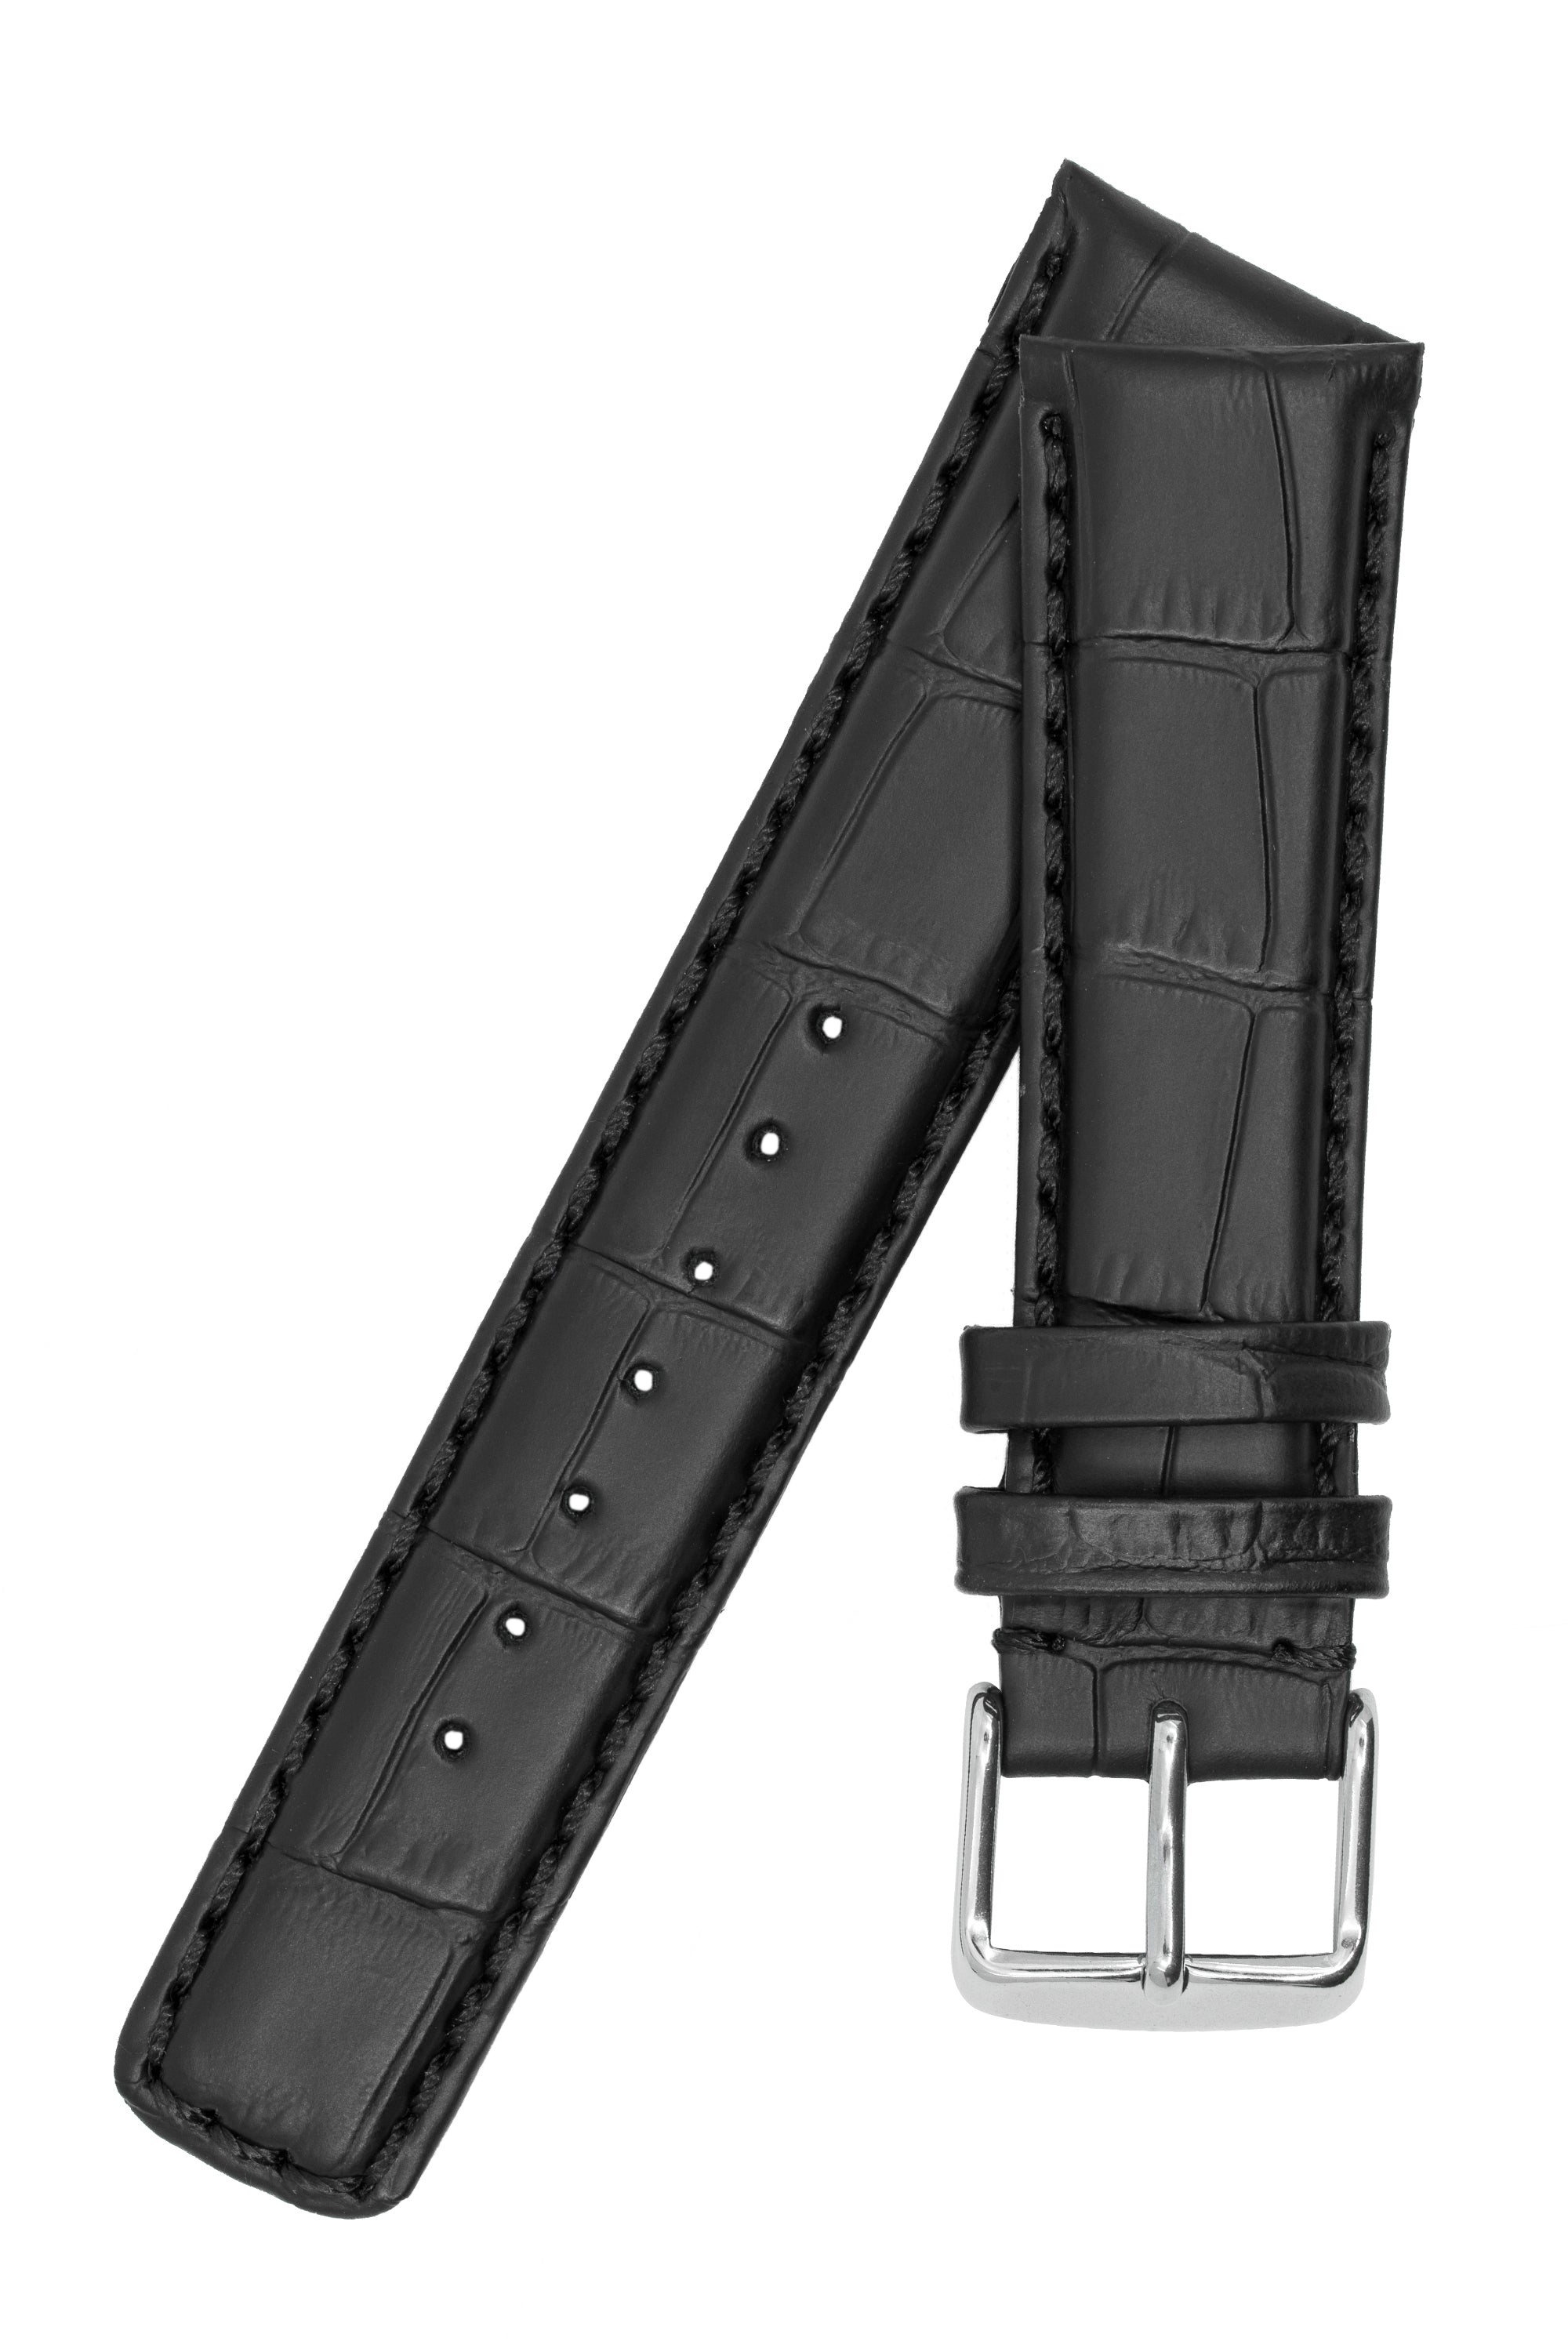 IWC-Style Alligator Watch Strap in BLACK | WatchObsession – Watch 